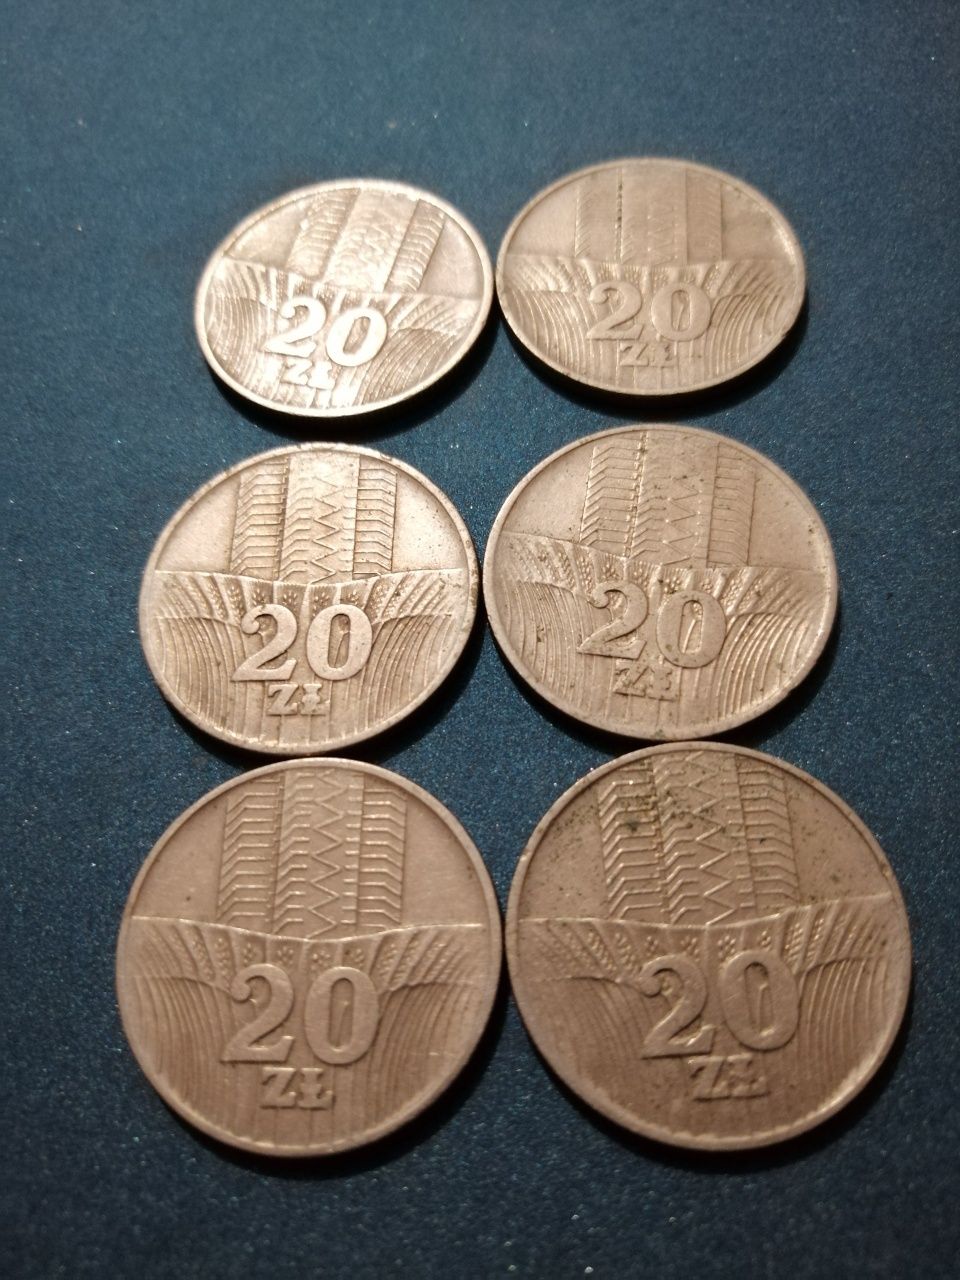 Stare monety od 1973